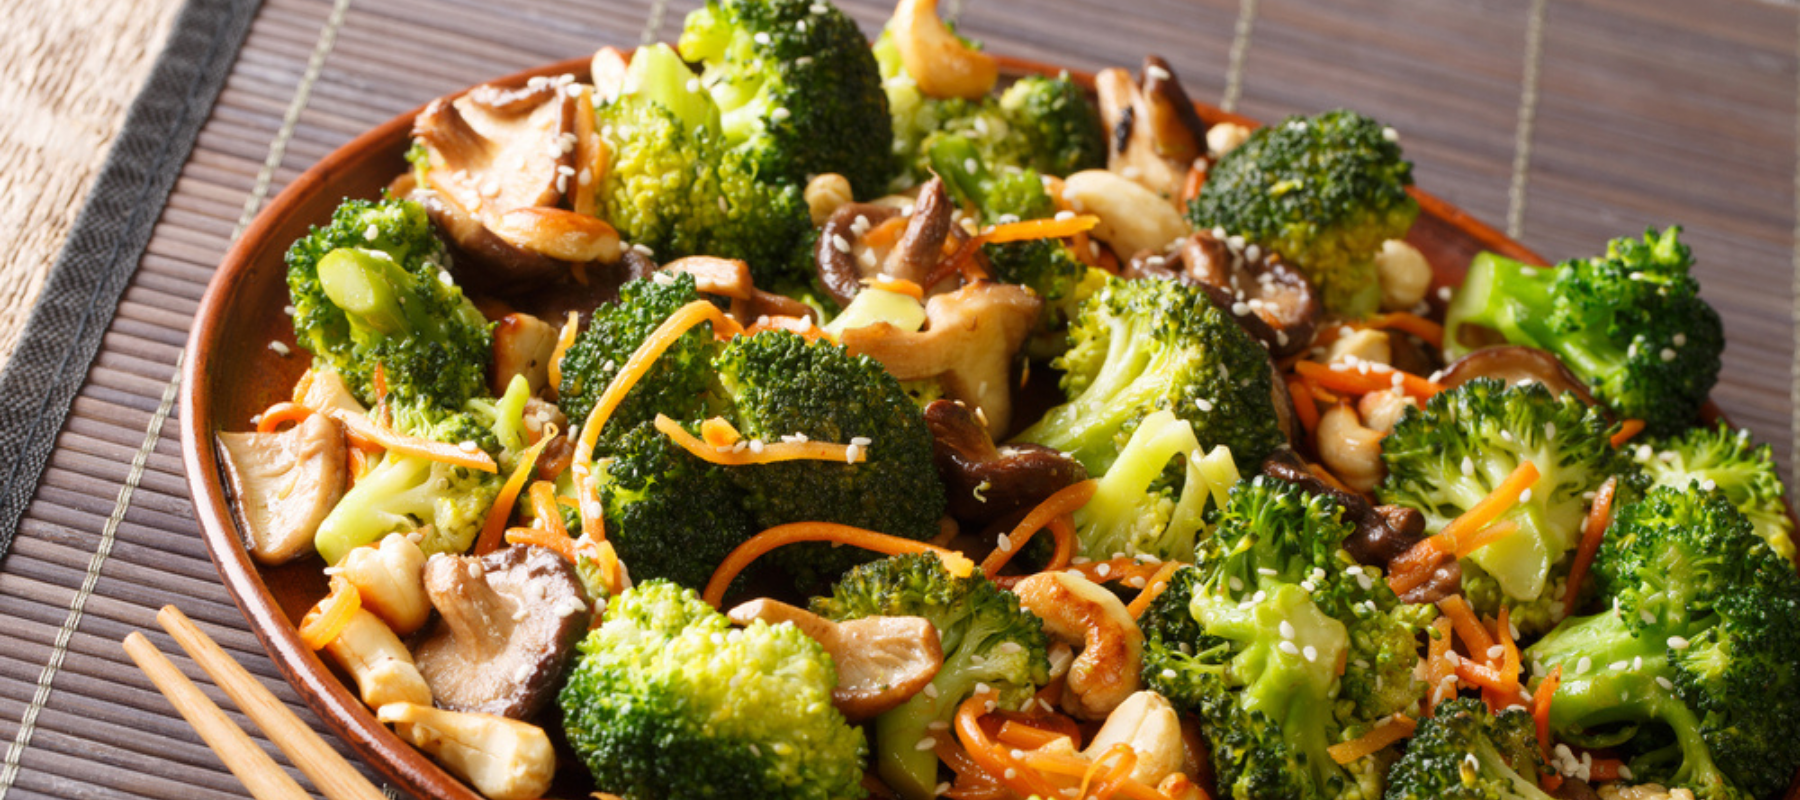 Broccoli & Shiitake Mushroom Sauté Recipe for Longevity | Oxford Healthspan